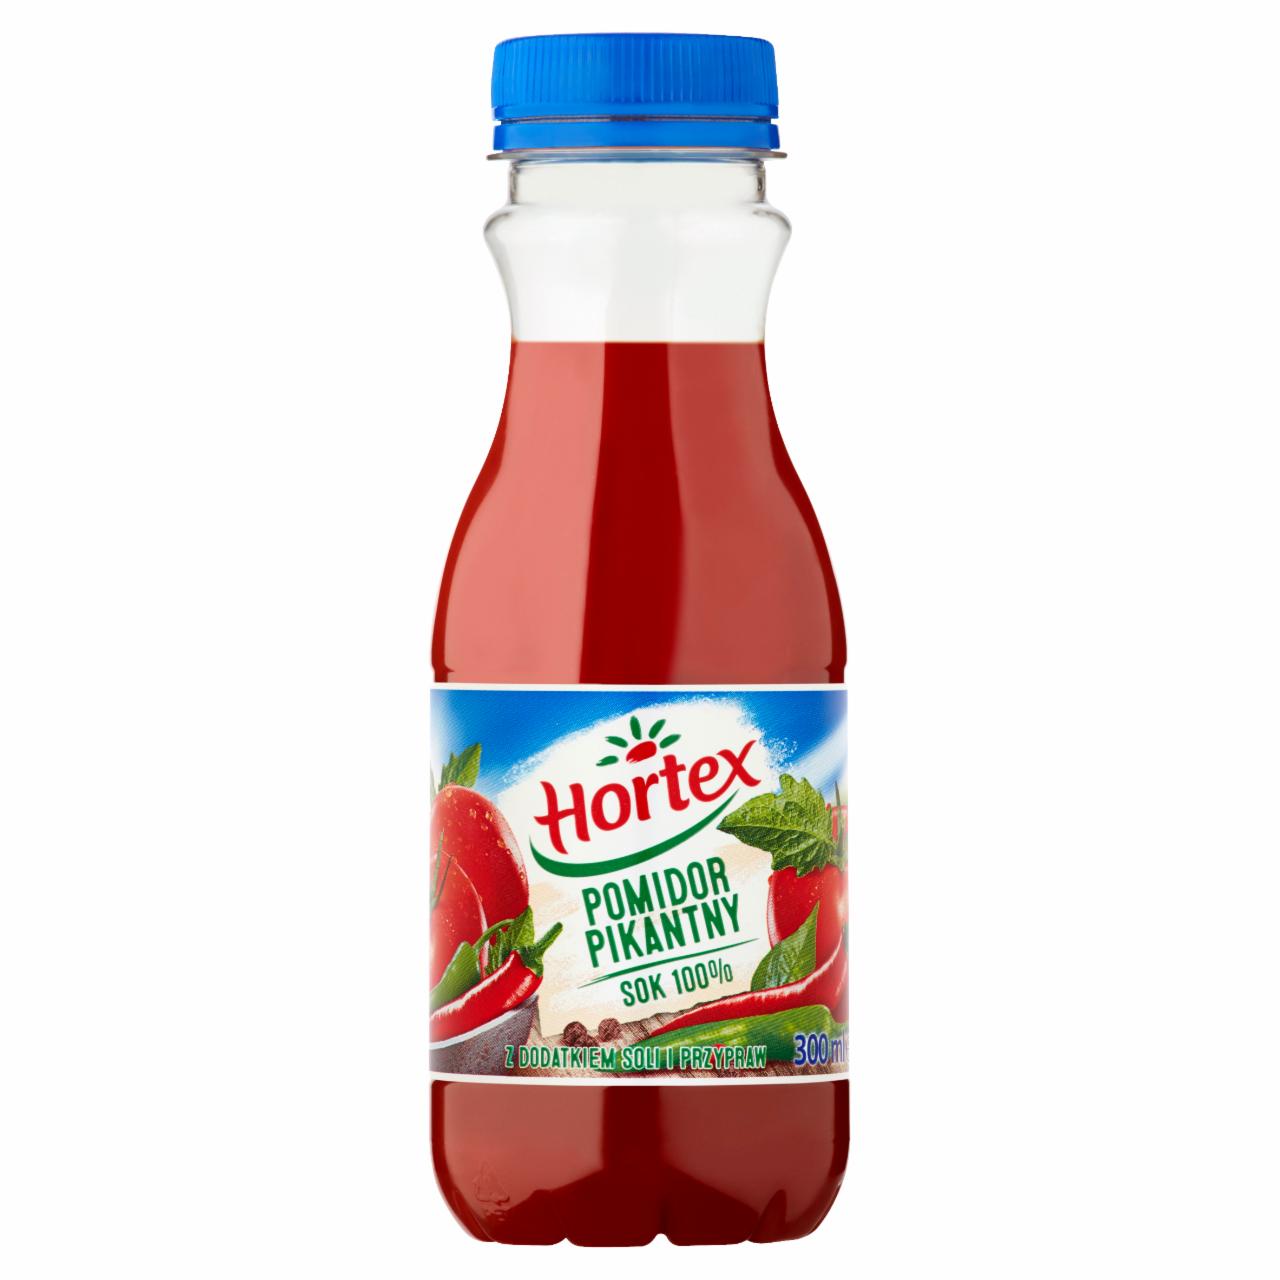 Zdjęcia - Hortex Pomidor pikantny Sok 100% 300 ml